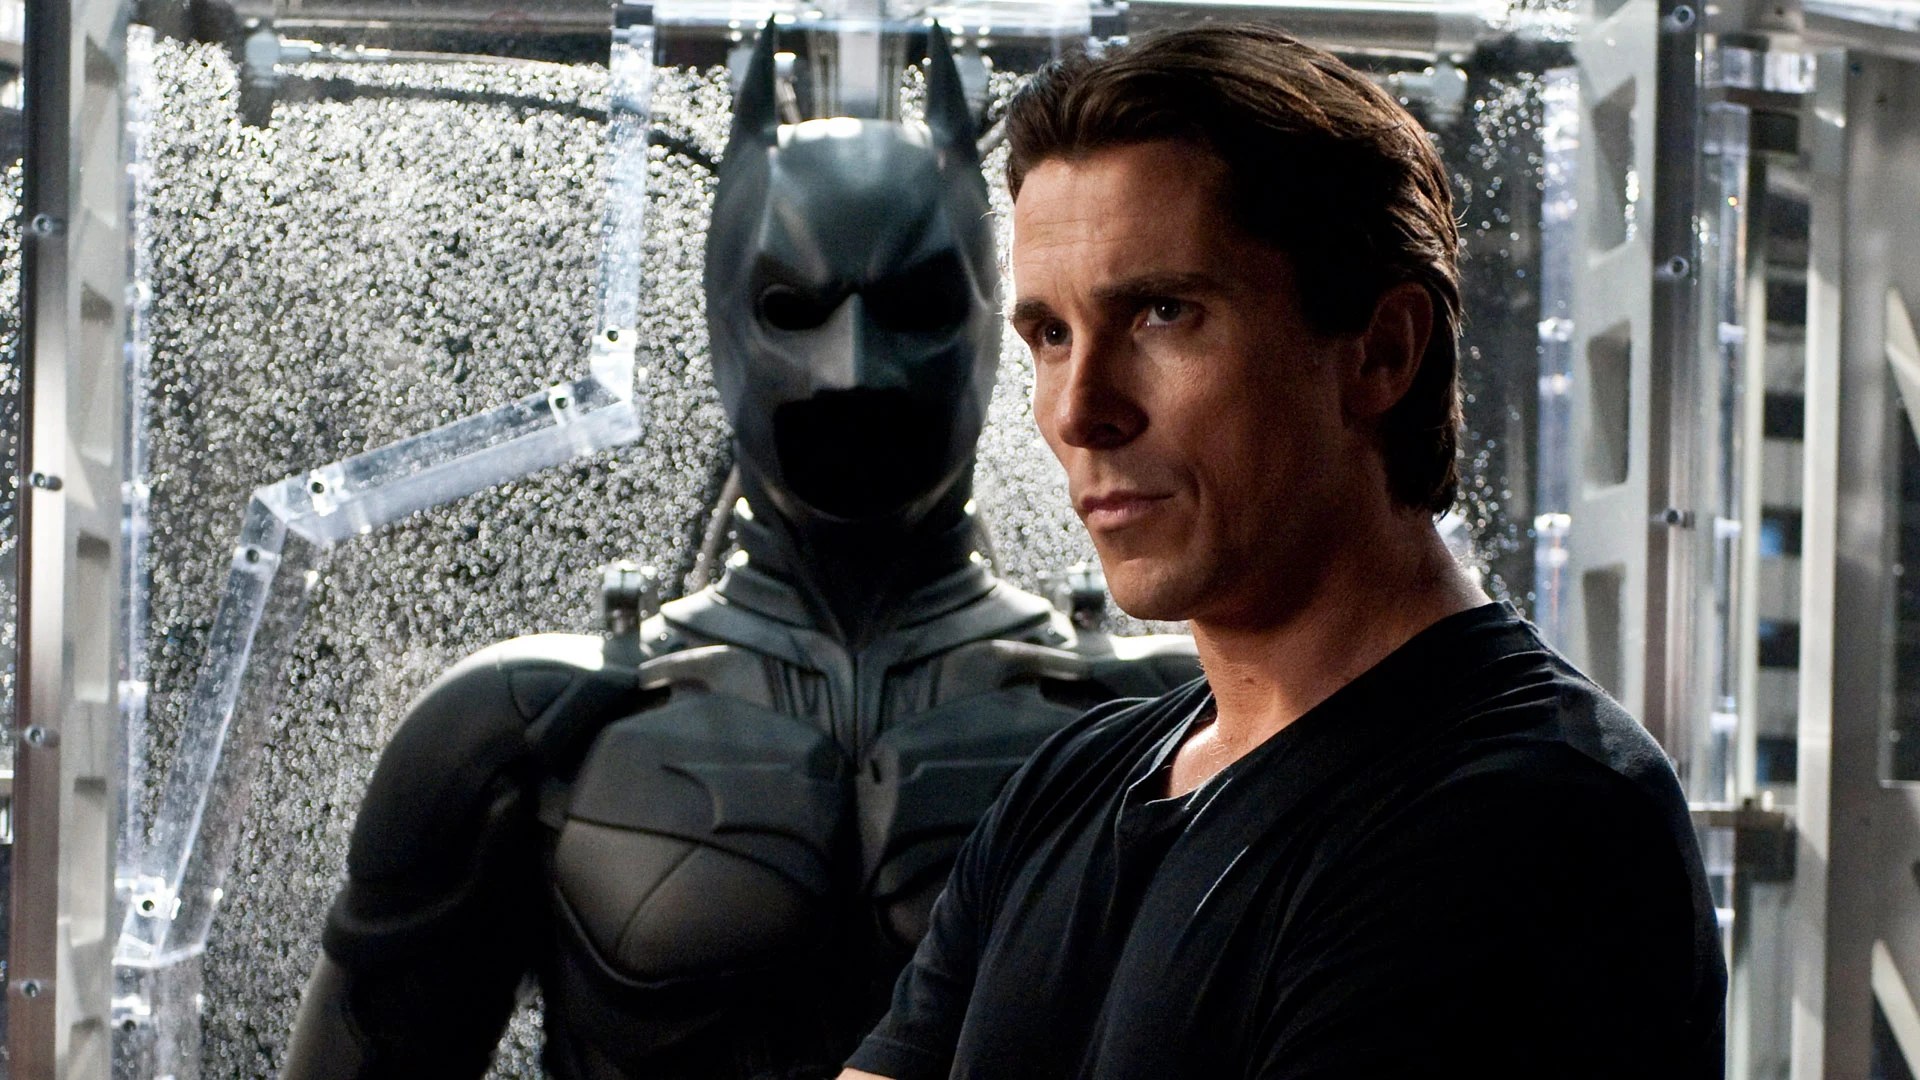 Should the Dark Knight rise again in a fourth movie?